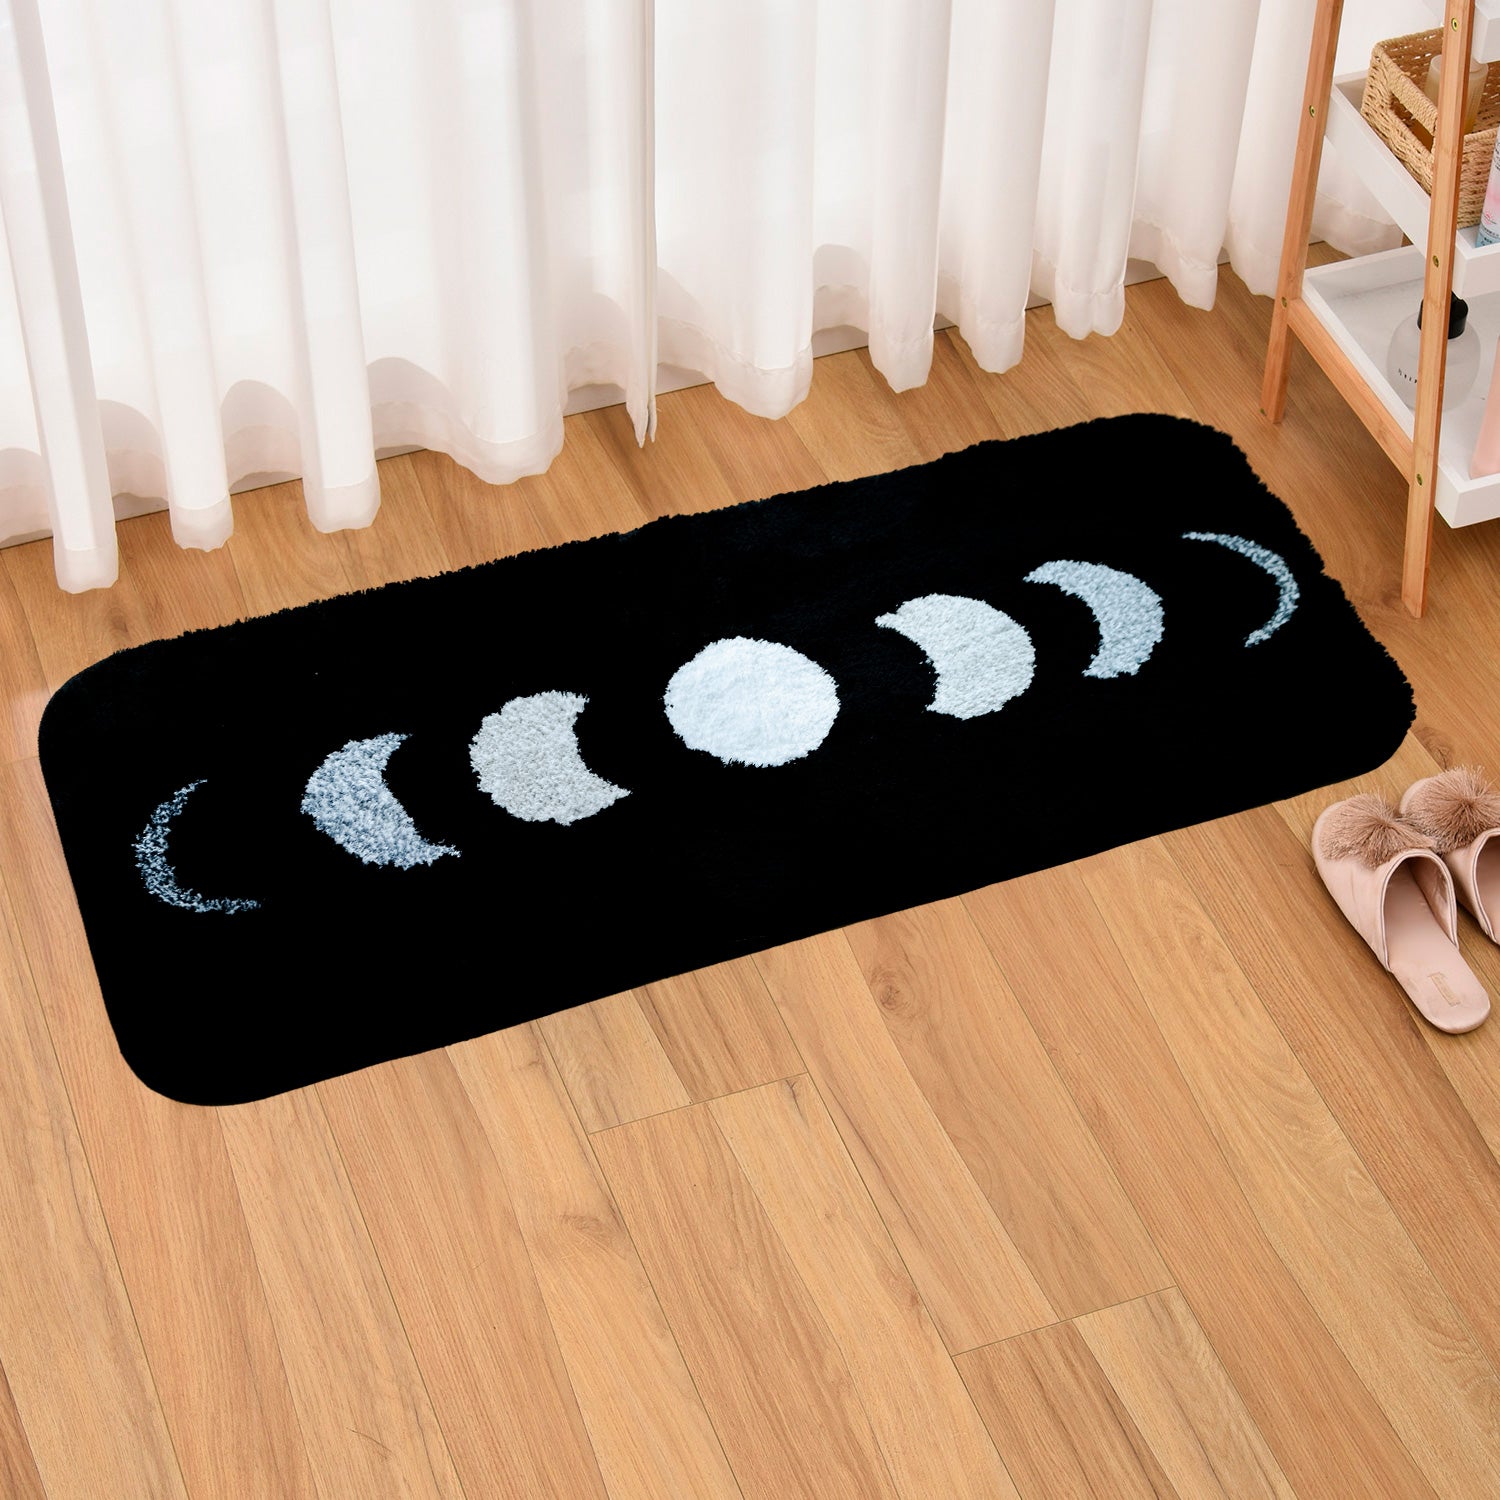 Feblilac Black Bedroom Rug Long Runner, Moon Pattern Rug for Bedside Bathroom, Water Absorbent Non-Slip Area Rug Mat for Home Decor